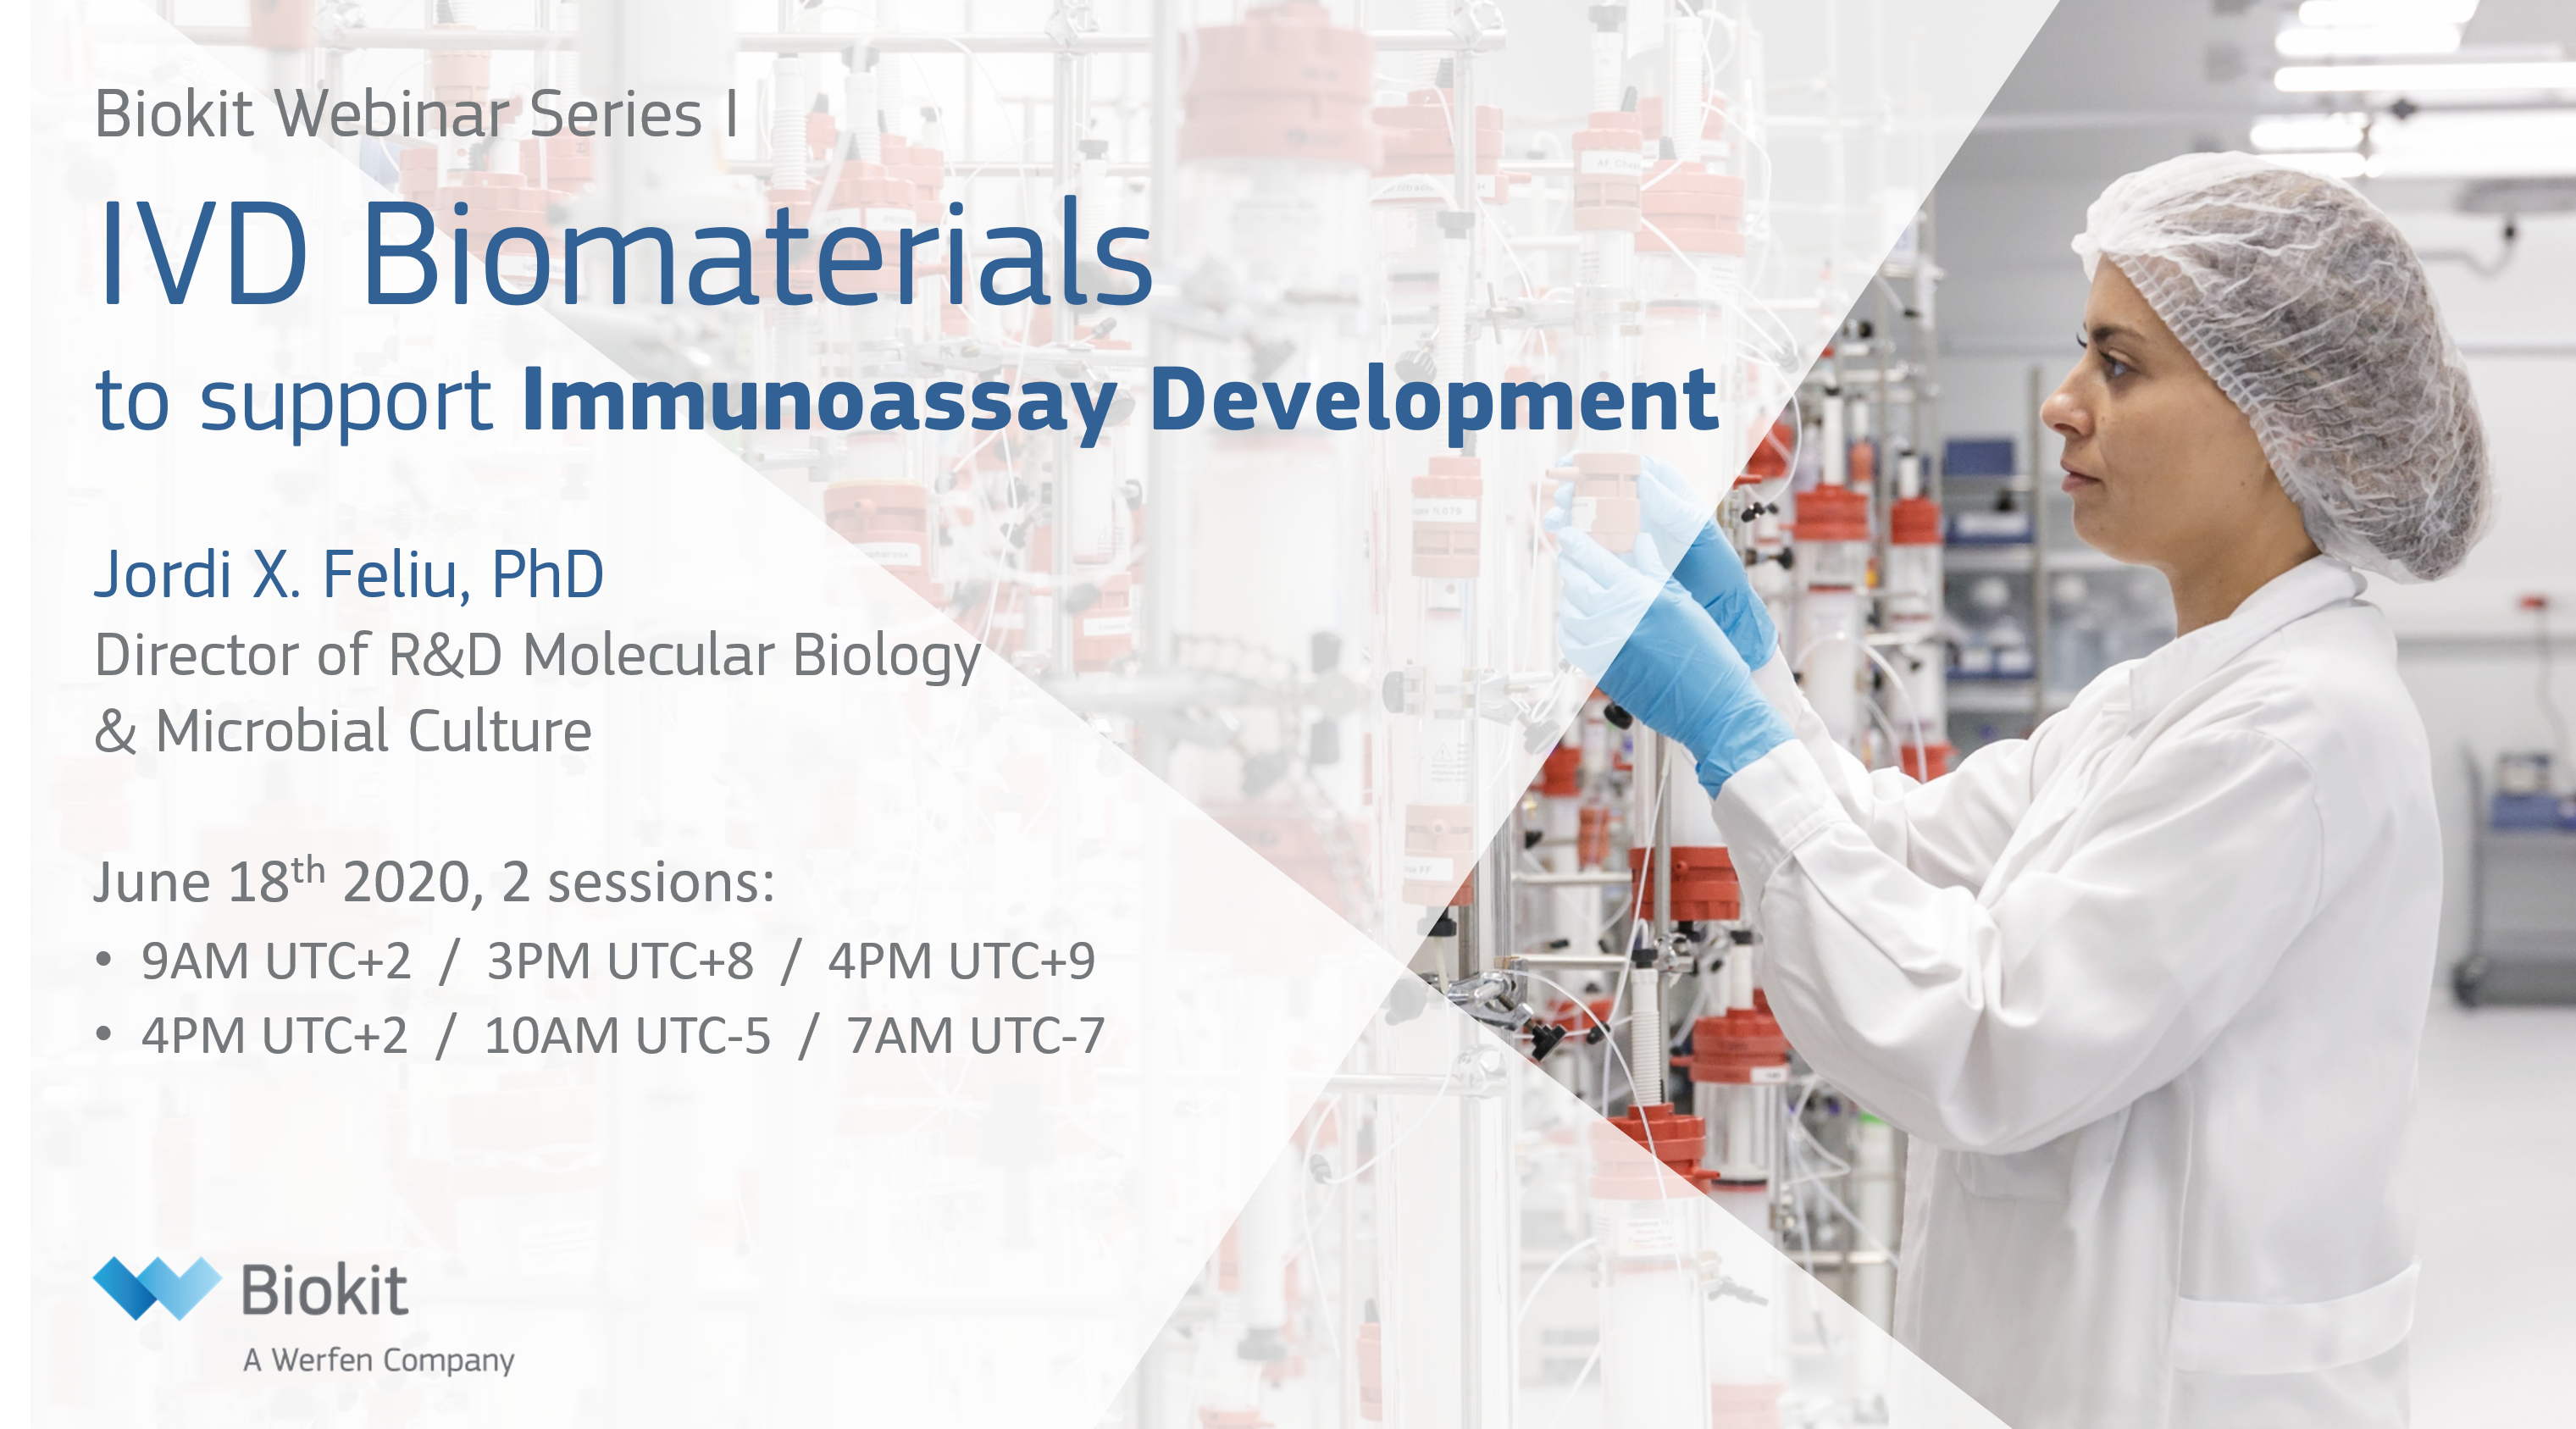 Webinar details: IVD Biomaterials to support immunoassay development